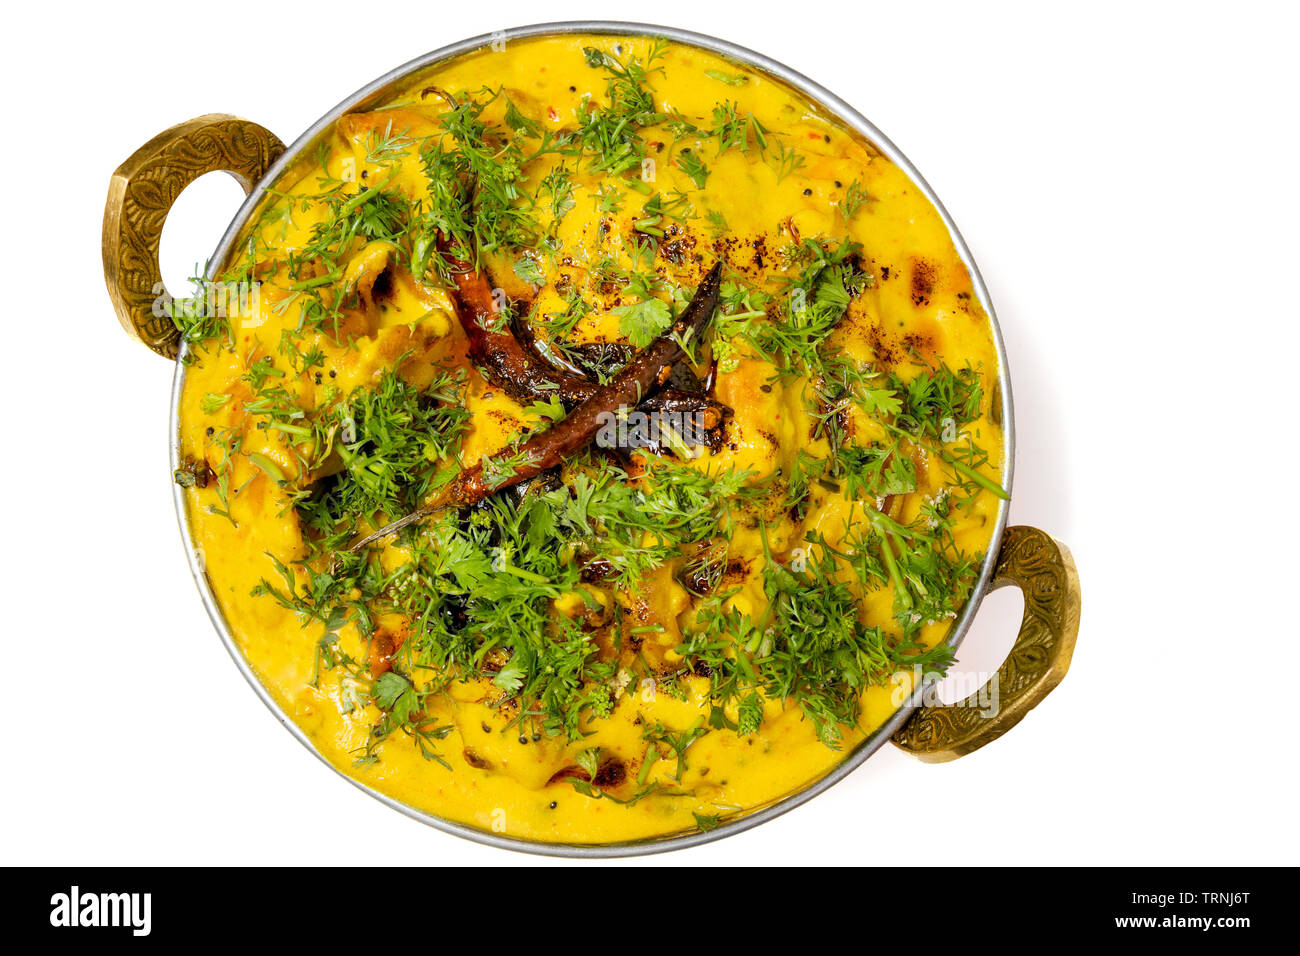 https://c8.alamy.com/comp/TRNJ6T/kadhi-pakoda-or-pakora-indian-cuisine-served-in-a-brass-kadai-or-bowl-isolated-on-white-background-TRNJ6T.jpg